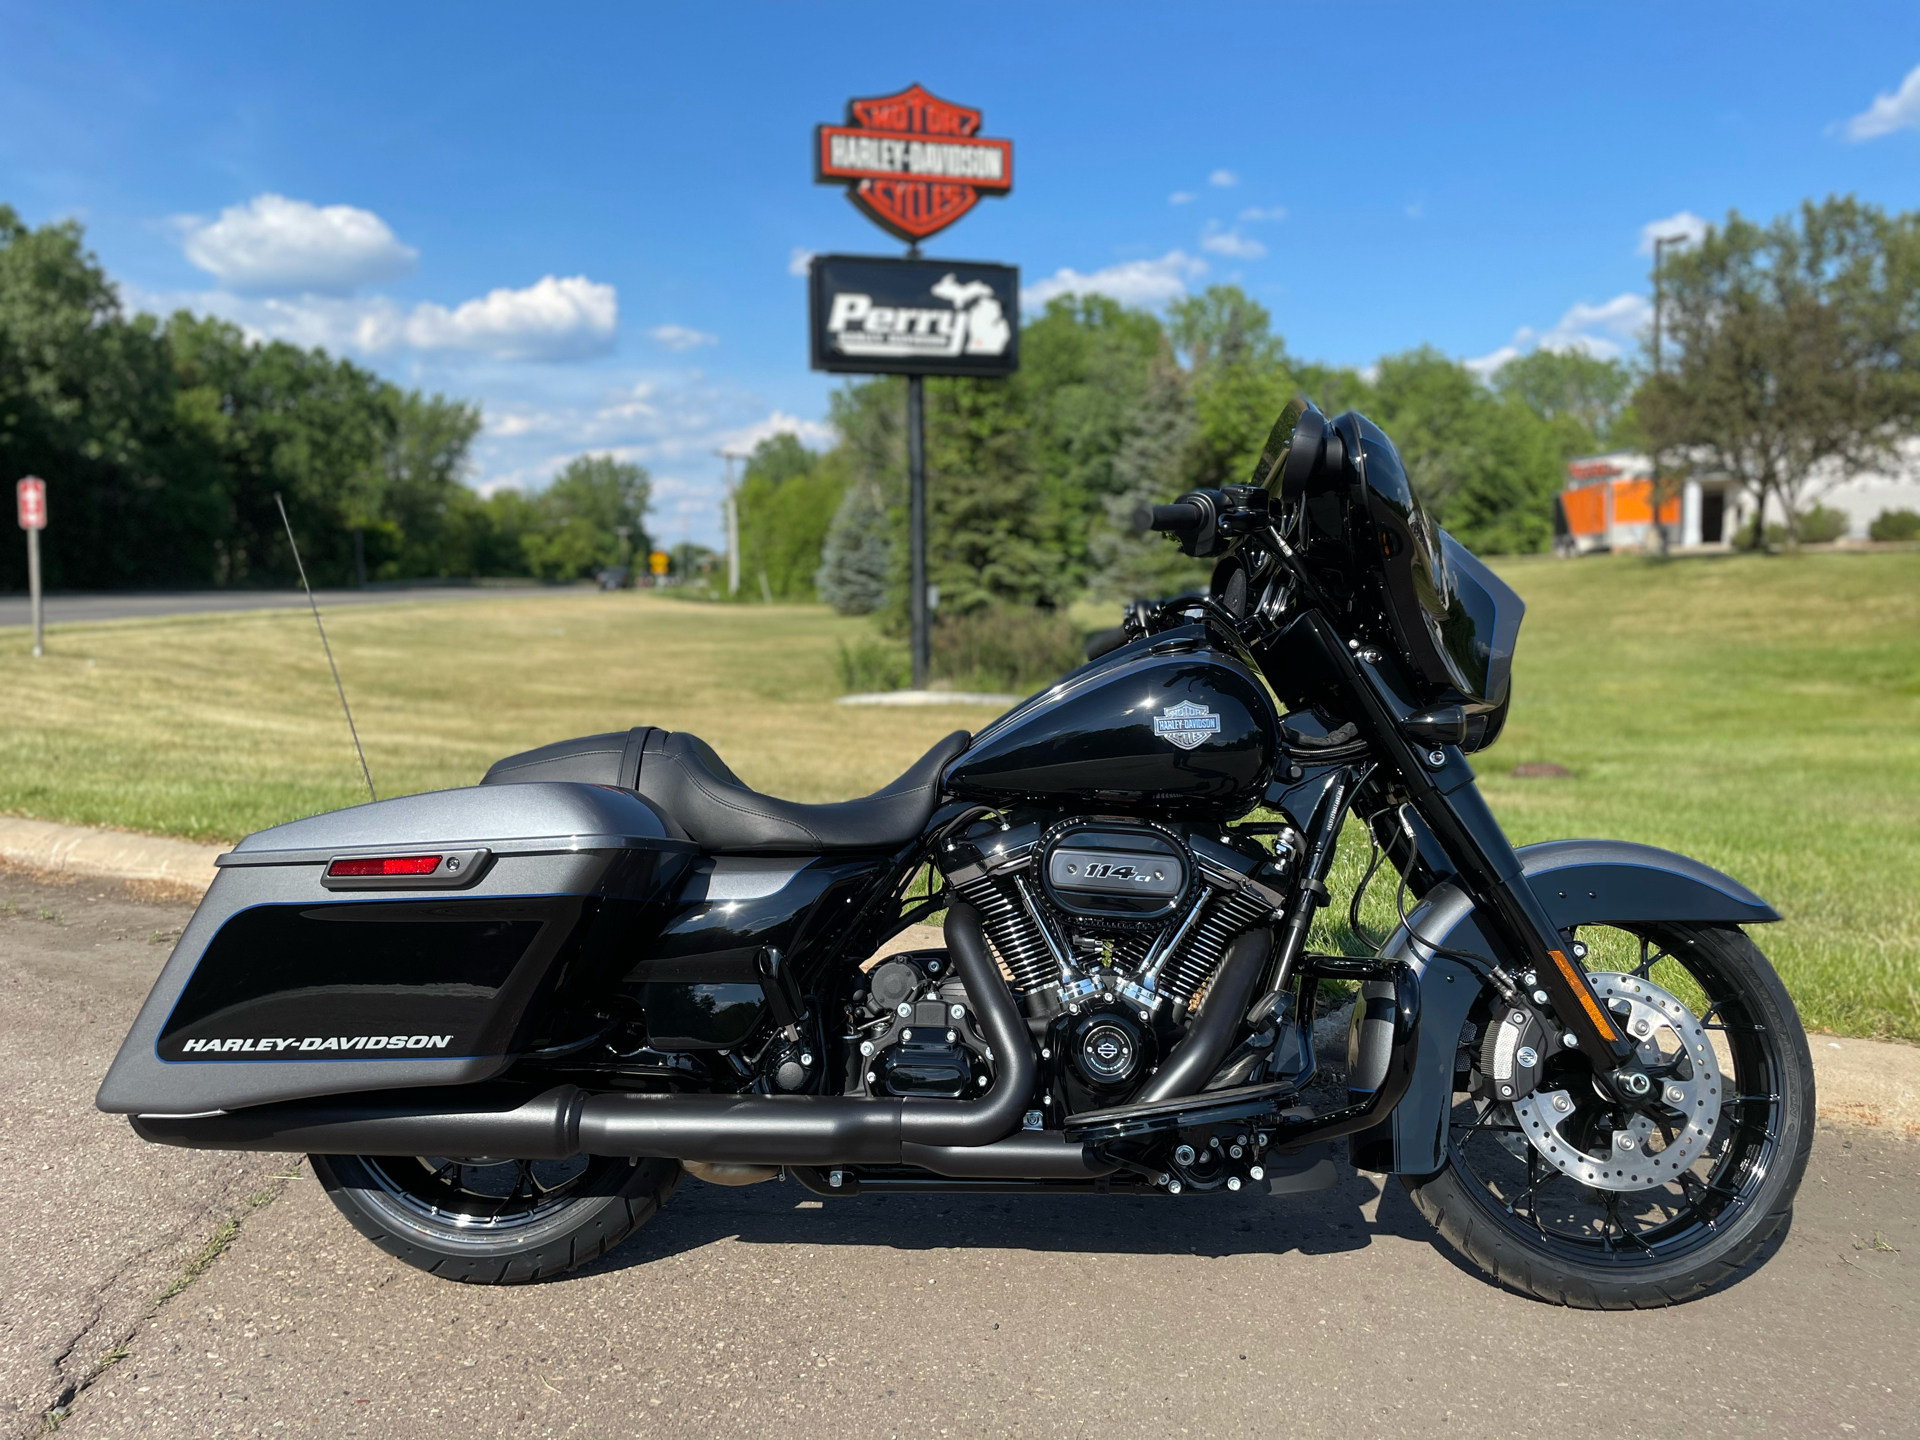 New 2021 Harley Davidson Street Glide Special Motorcycles In Portage Mi 621630 Gauntlet Gray Metallic Vivid Black Black Pearl Option